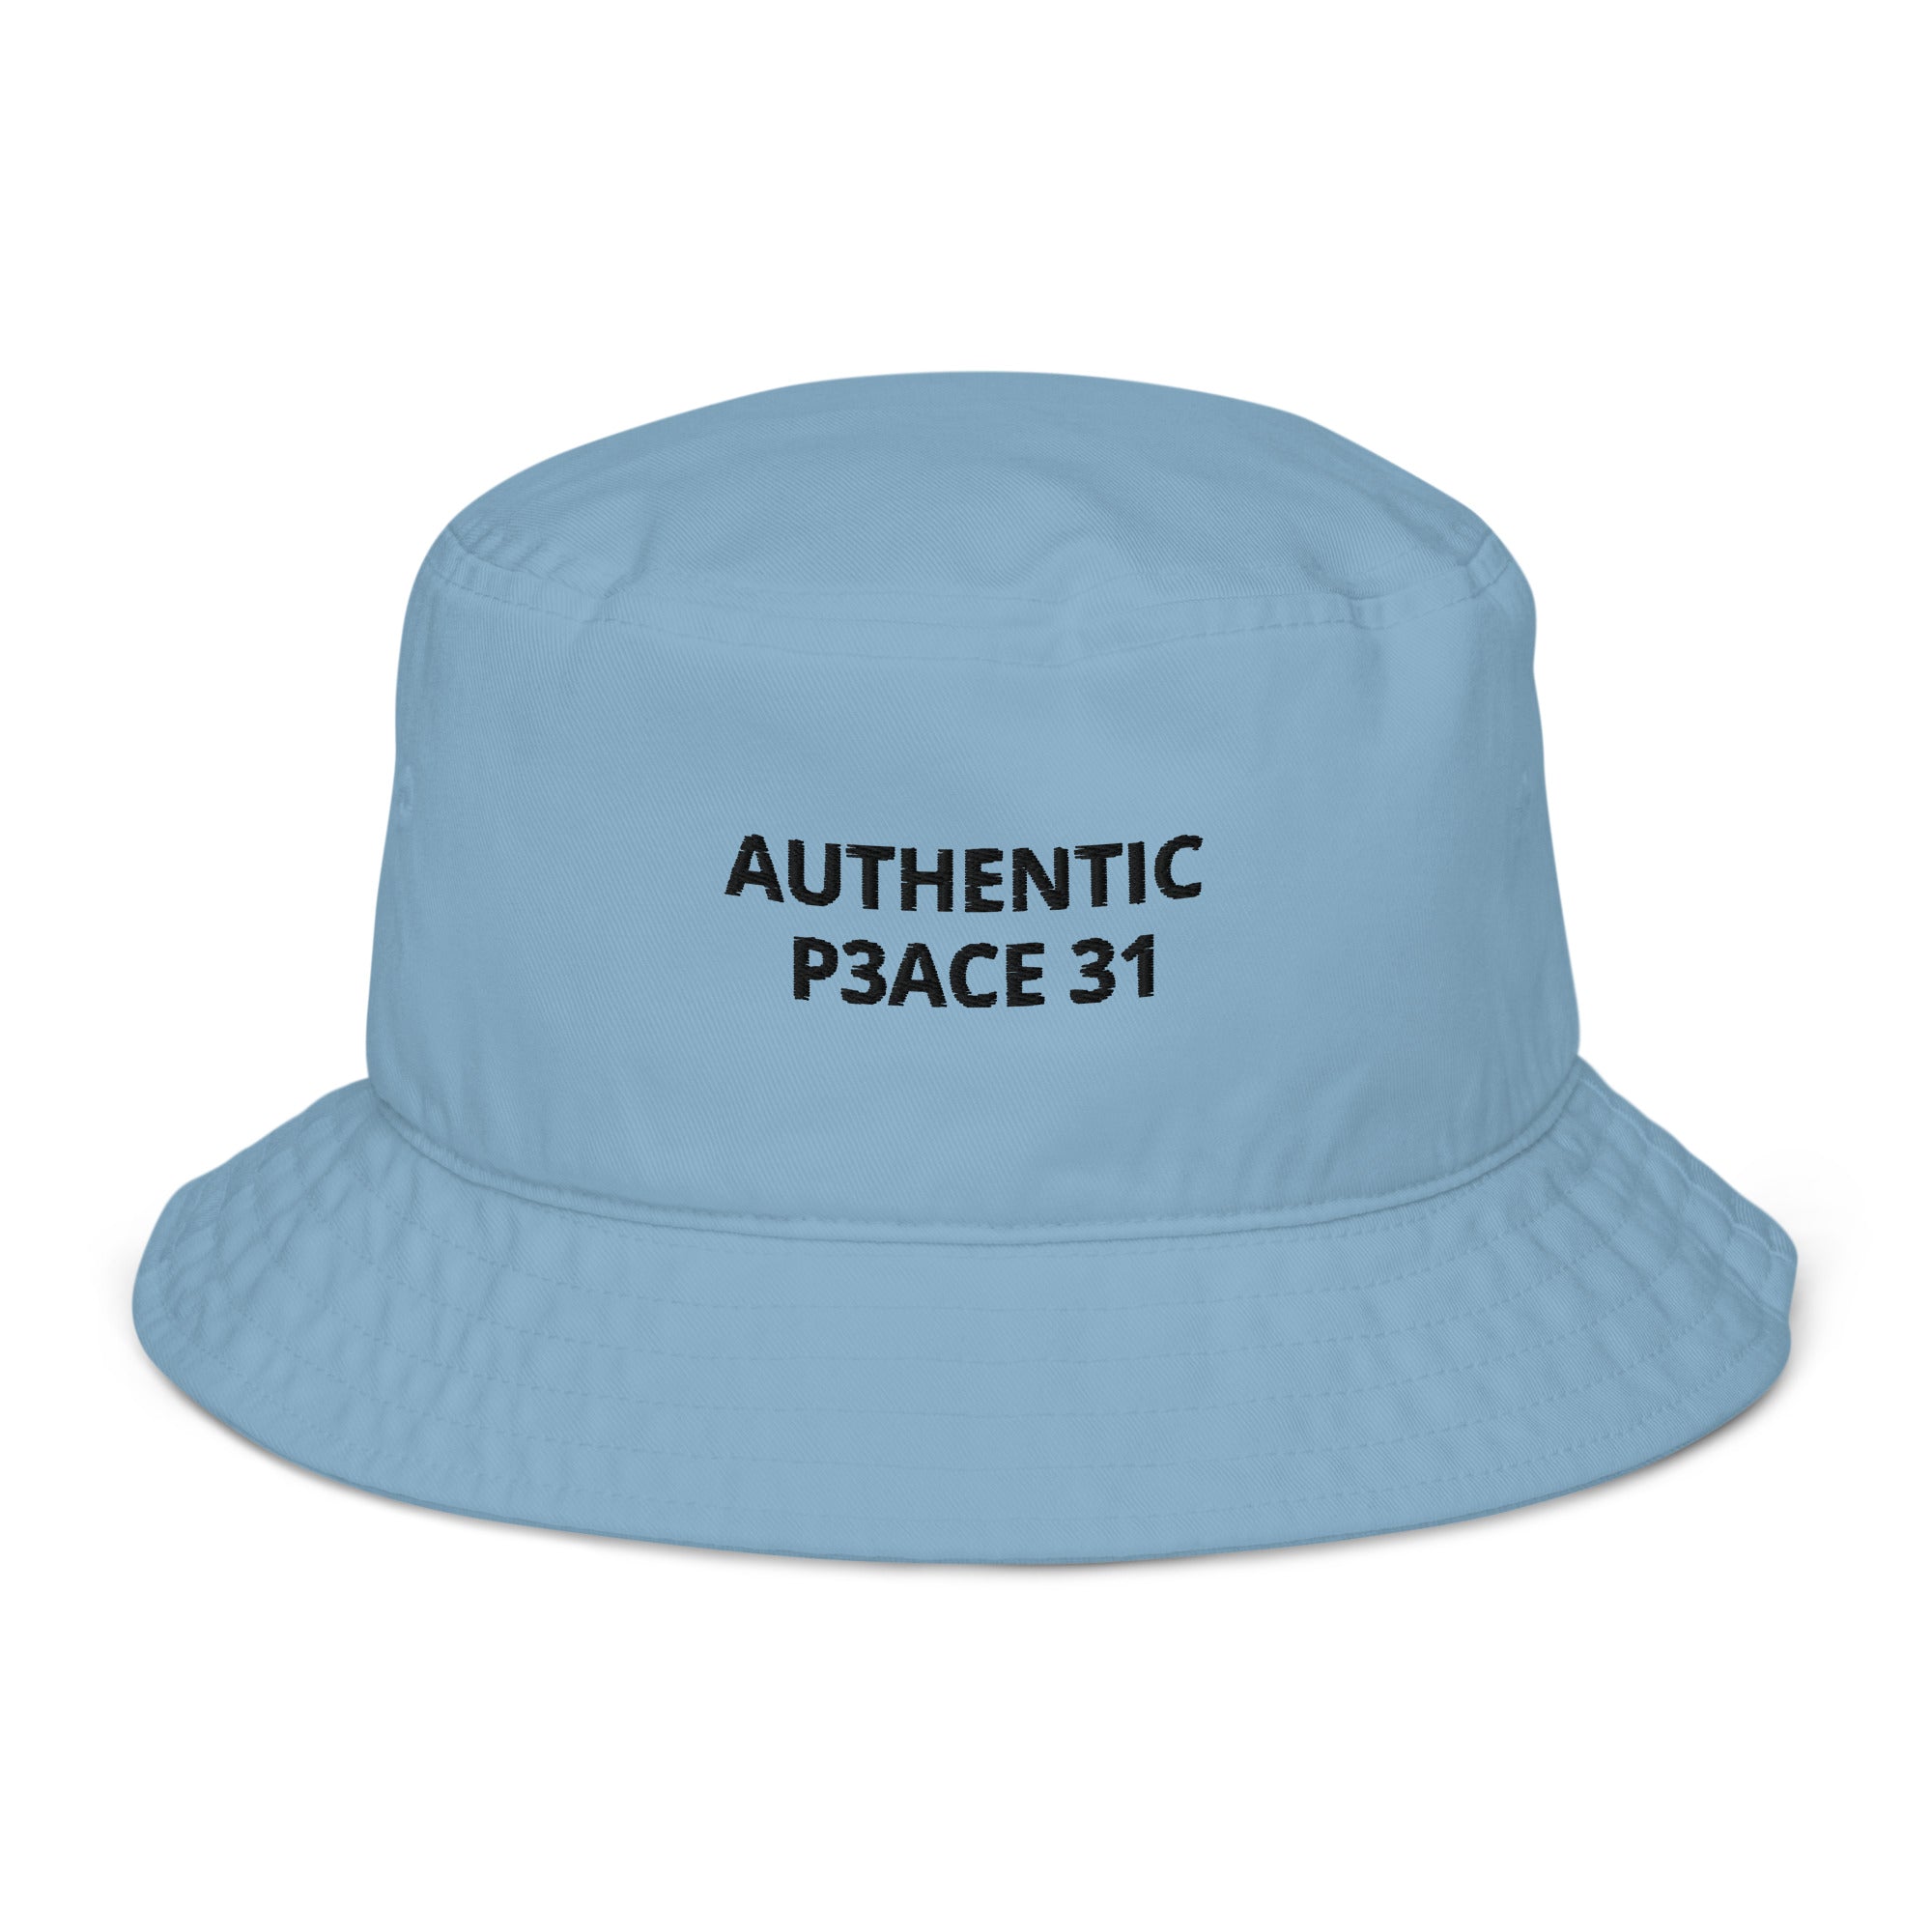 Authentic P3ace Bucket Hat Black Words